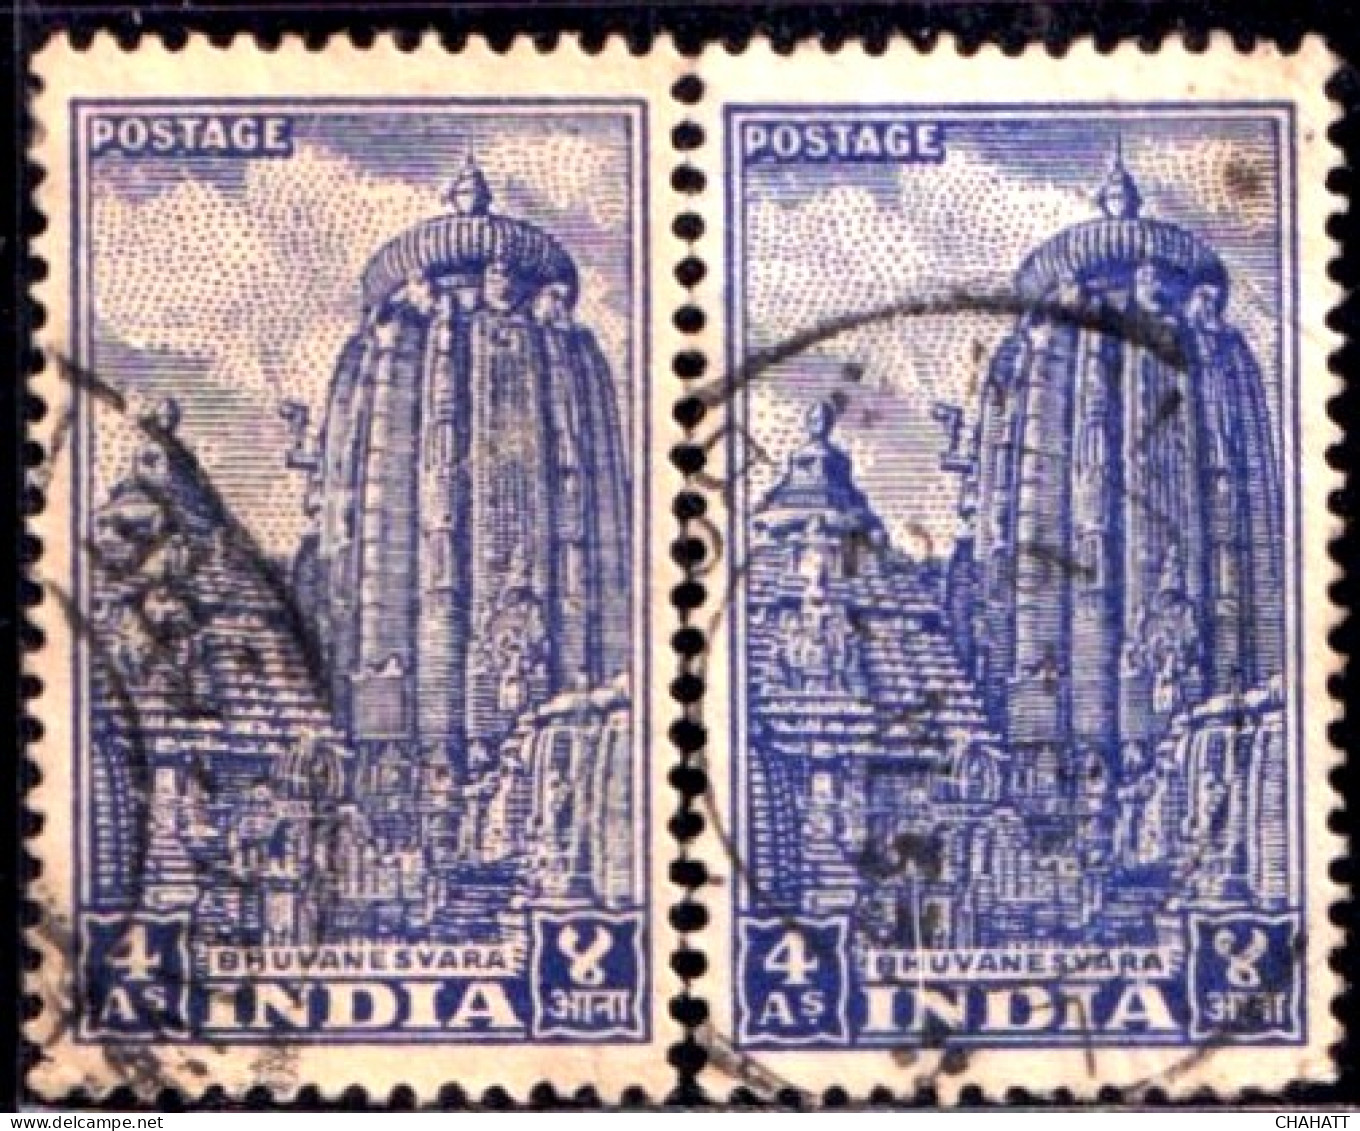 HINDUISM- ARCHAEOLOGICAL SERIES-PRE DECIMAL- 4 ANNA-PURI TEMPLE, BHUVANESWAR-COLOR VARIETIY- SCARCE-INDIA-1949-FU-IE-94 - Hinduism